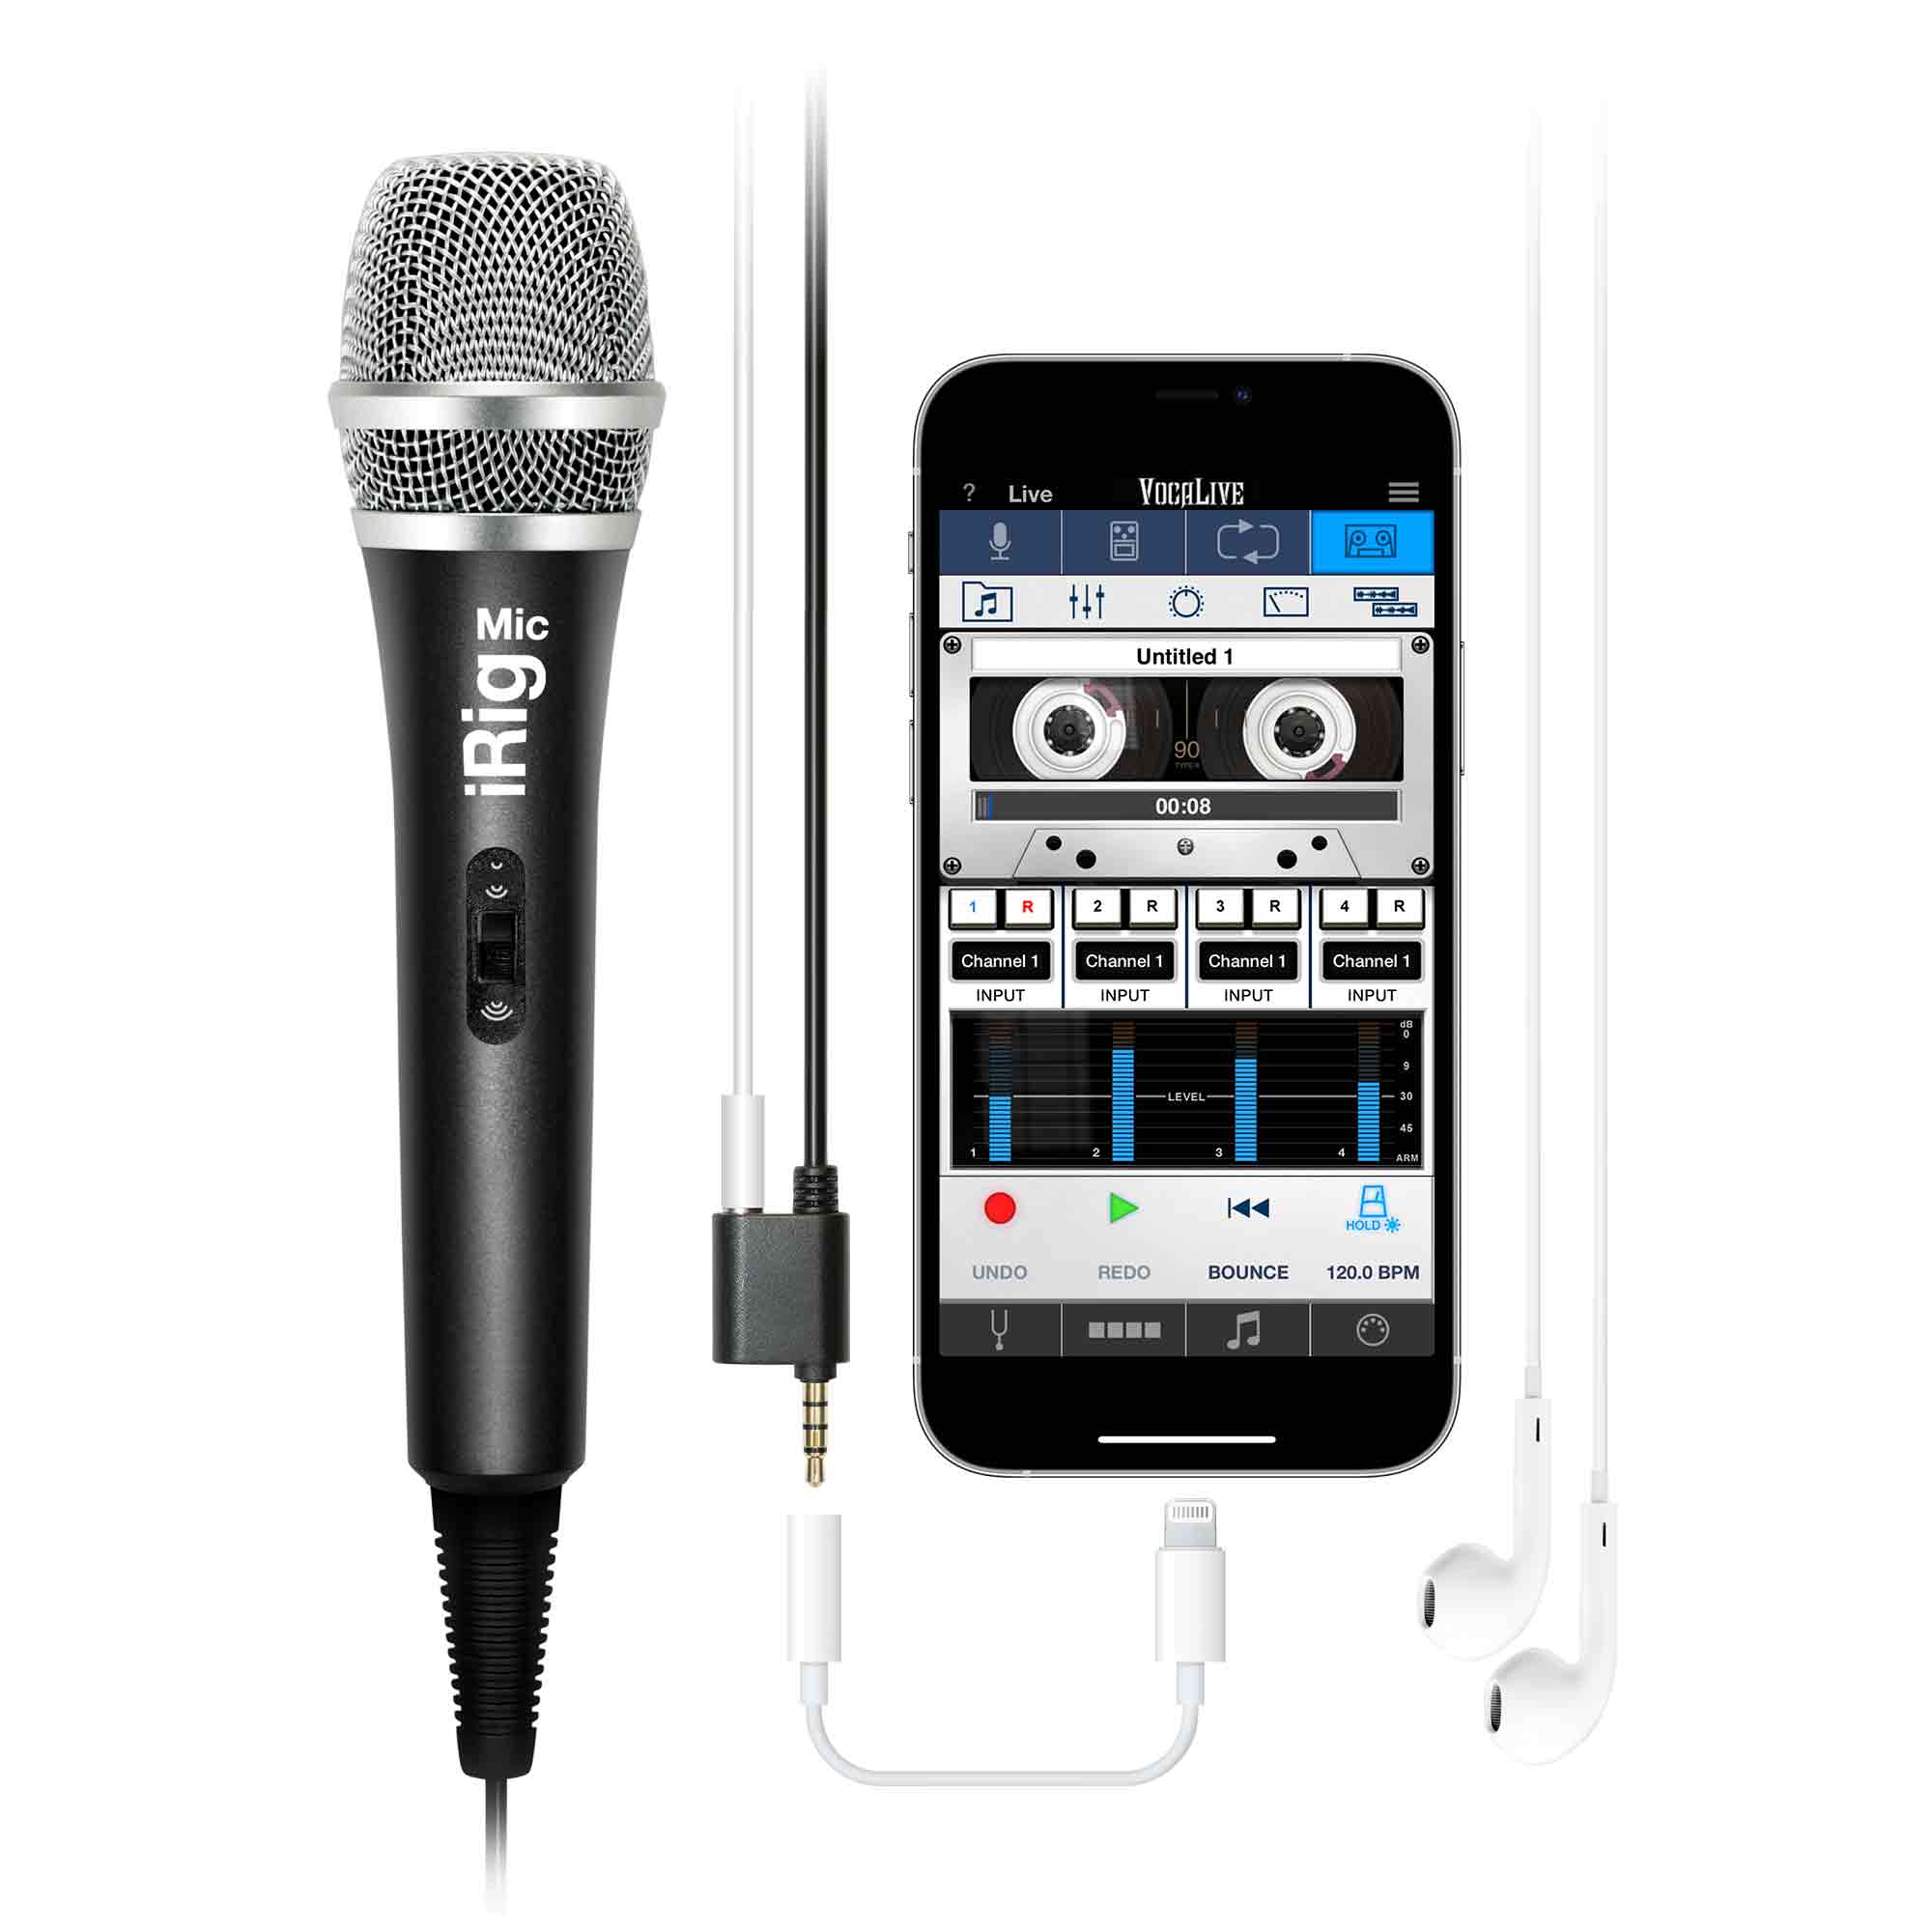 IRIG MIC Micrófono Para iPhone, iPod, iPad, Android - Loopstore